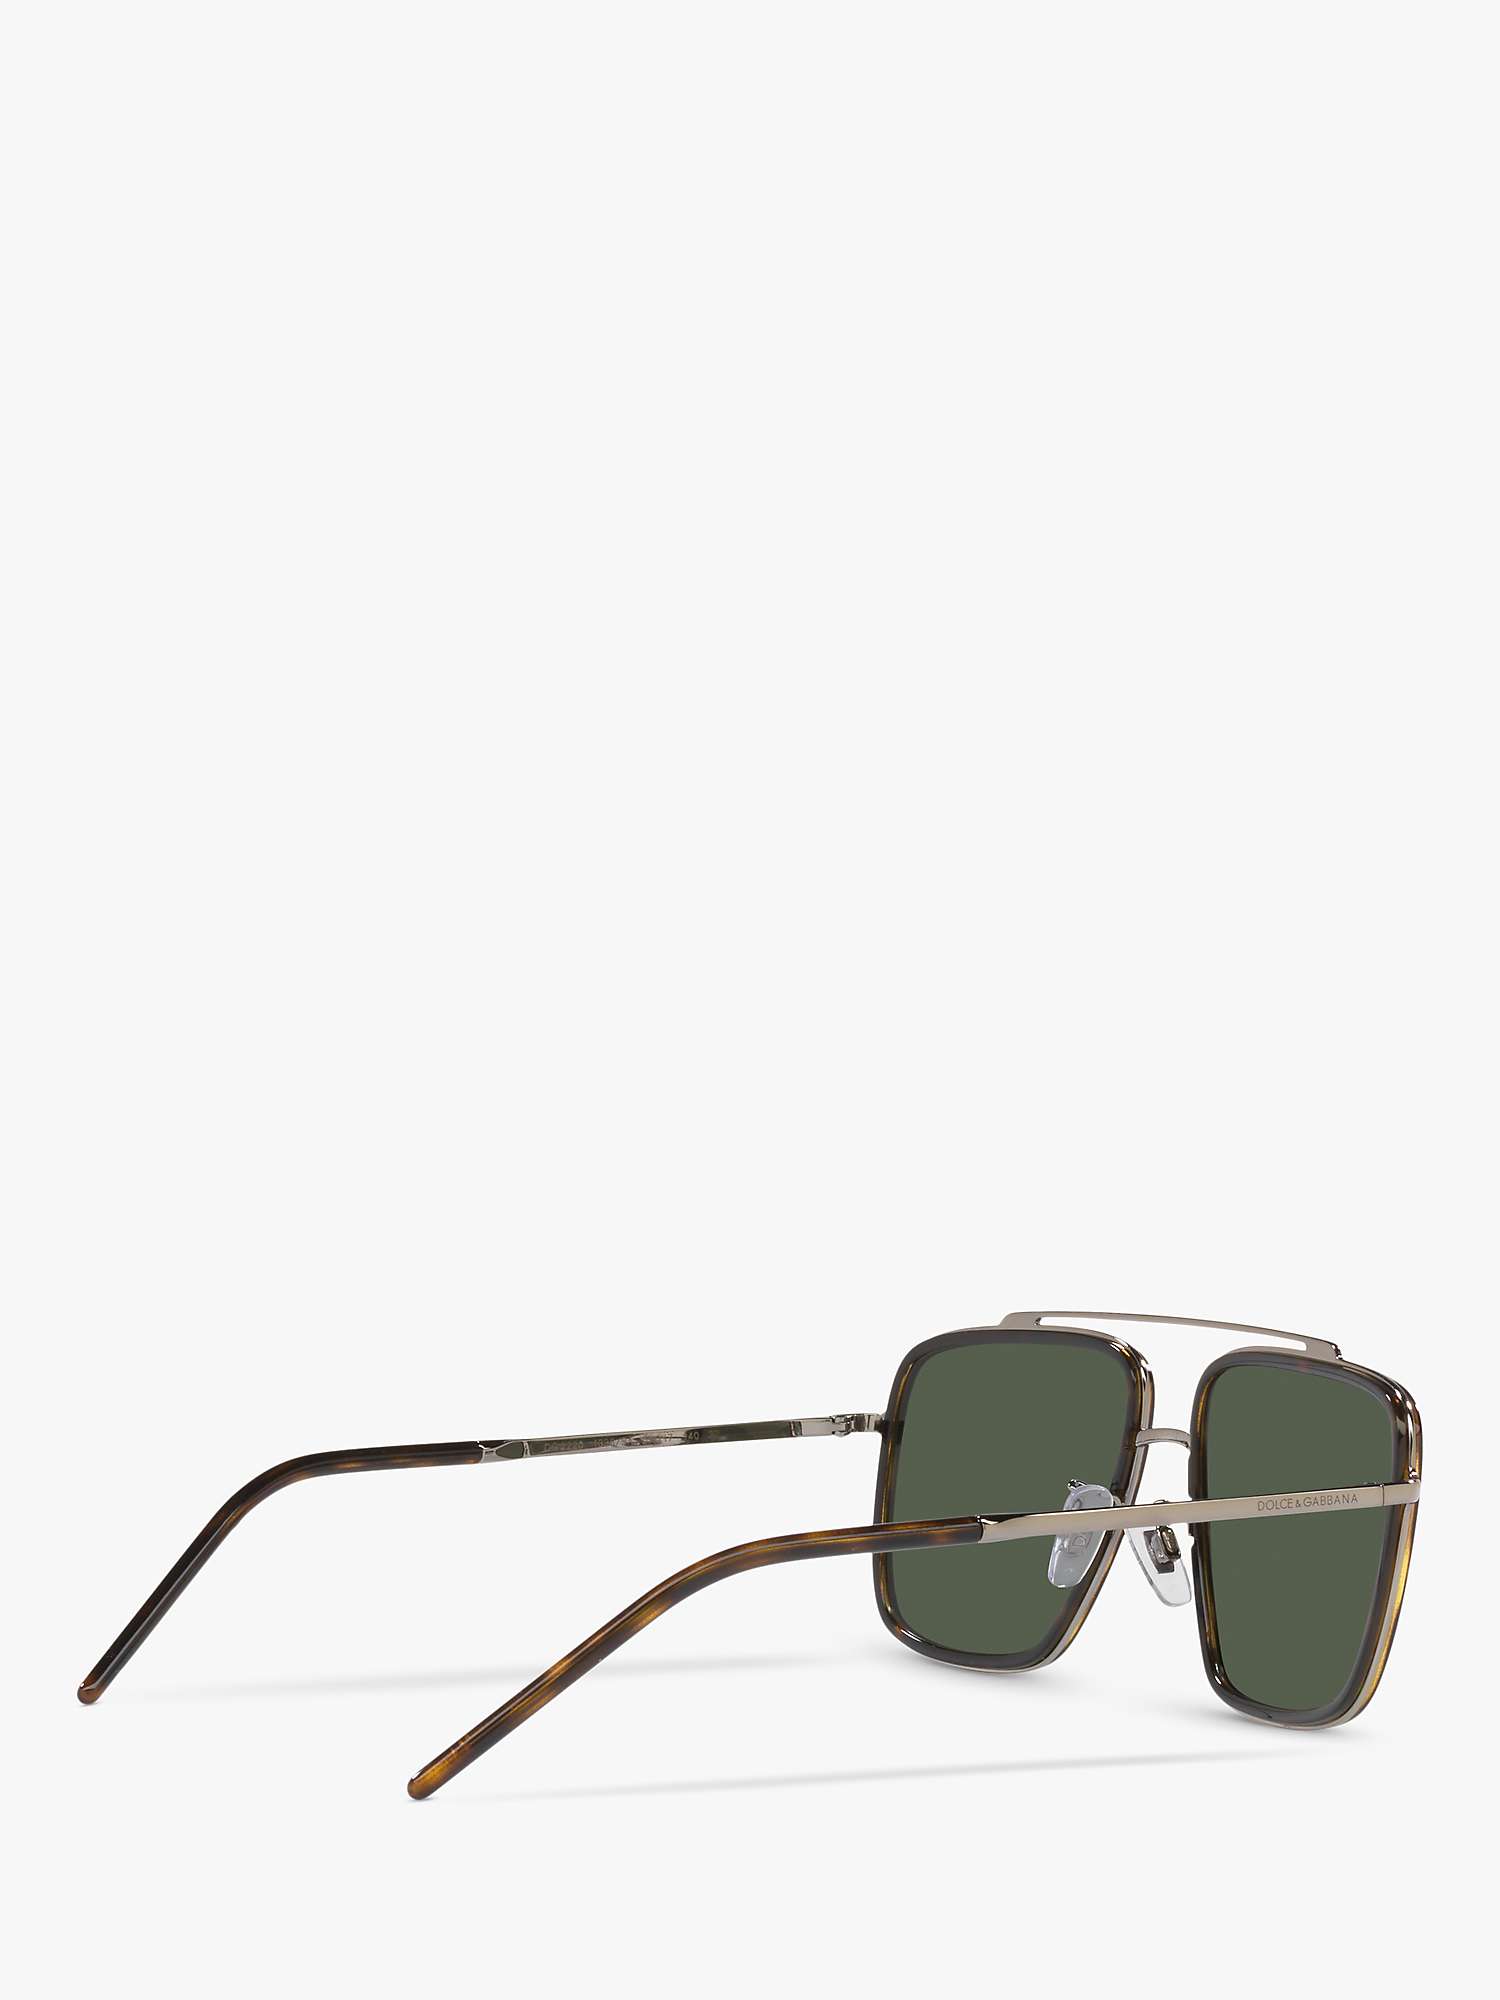 Buy Dolce & Gabbana DG2220 Men's Polarised Square Sunglasses, Bronze/Green Online at johnlewis.com